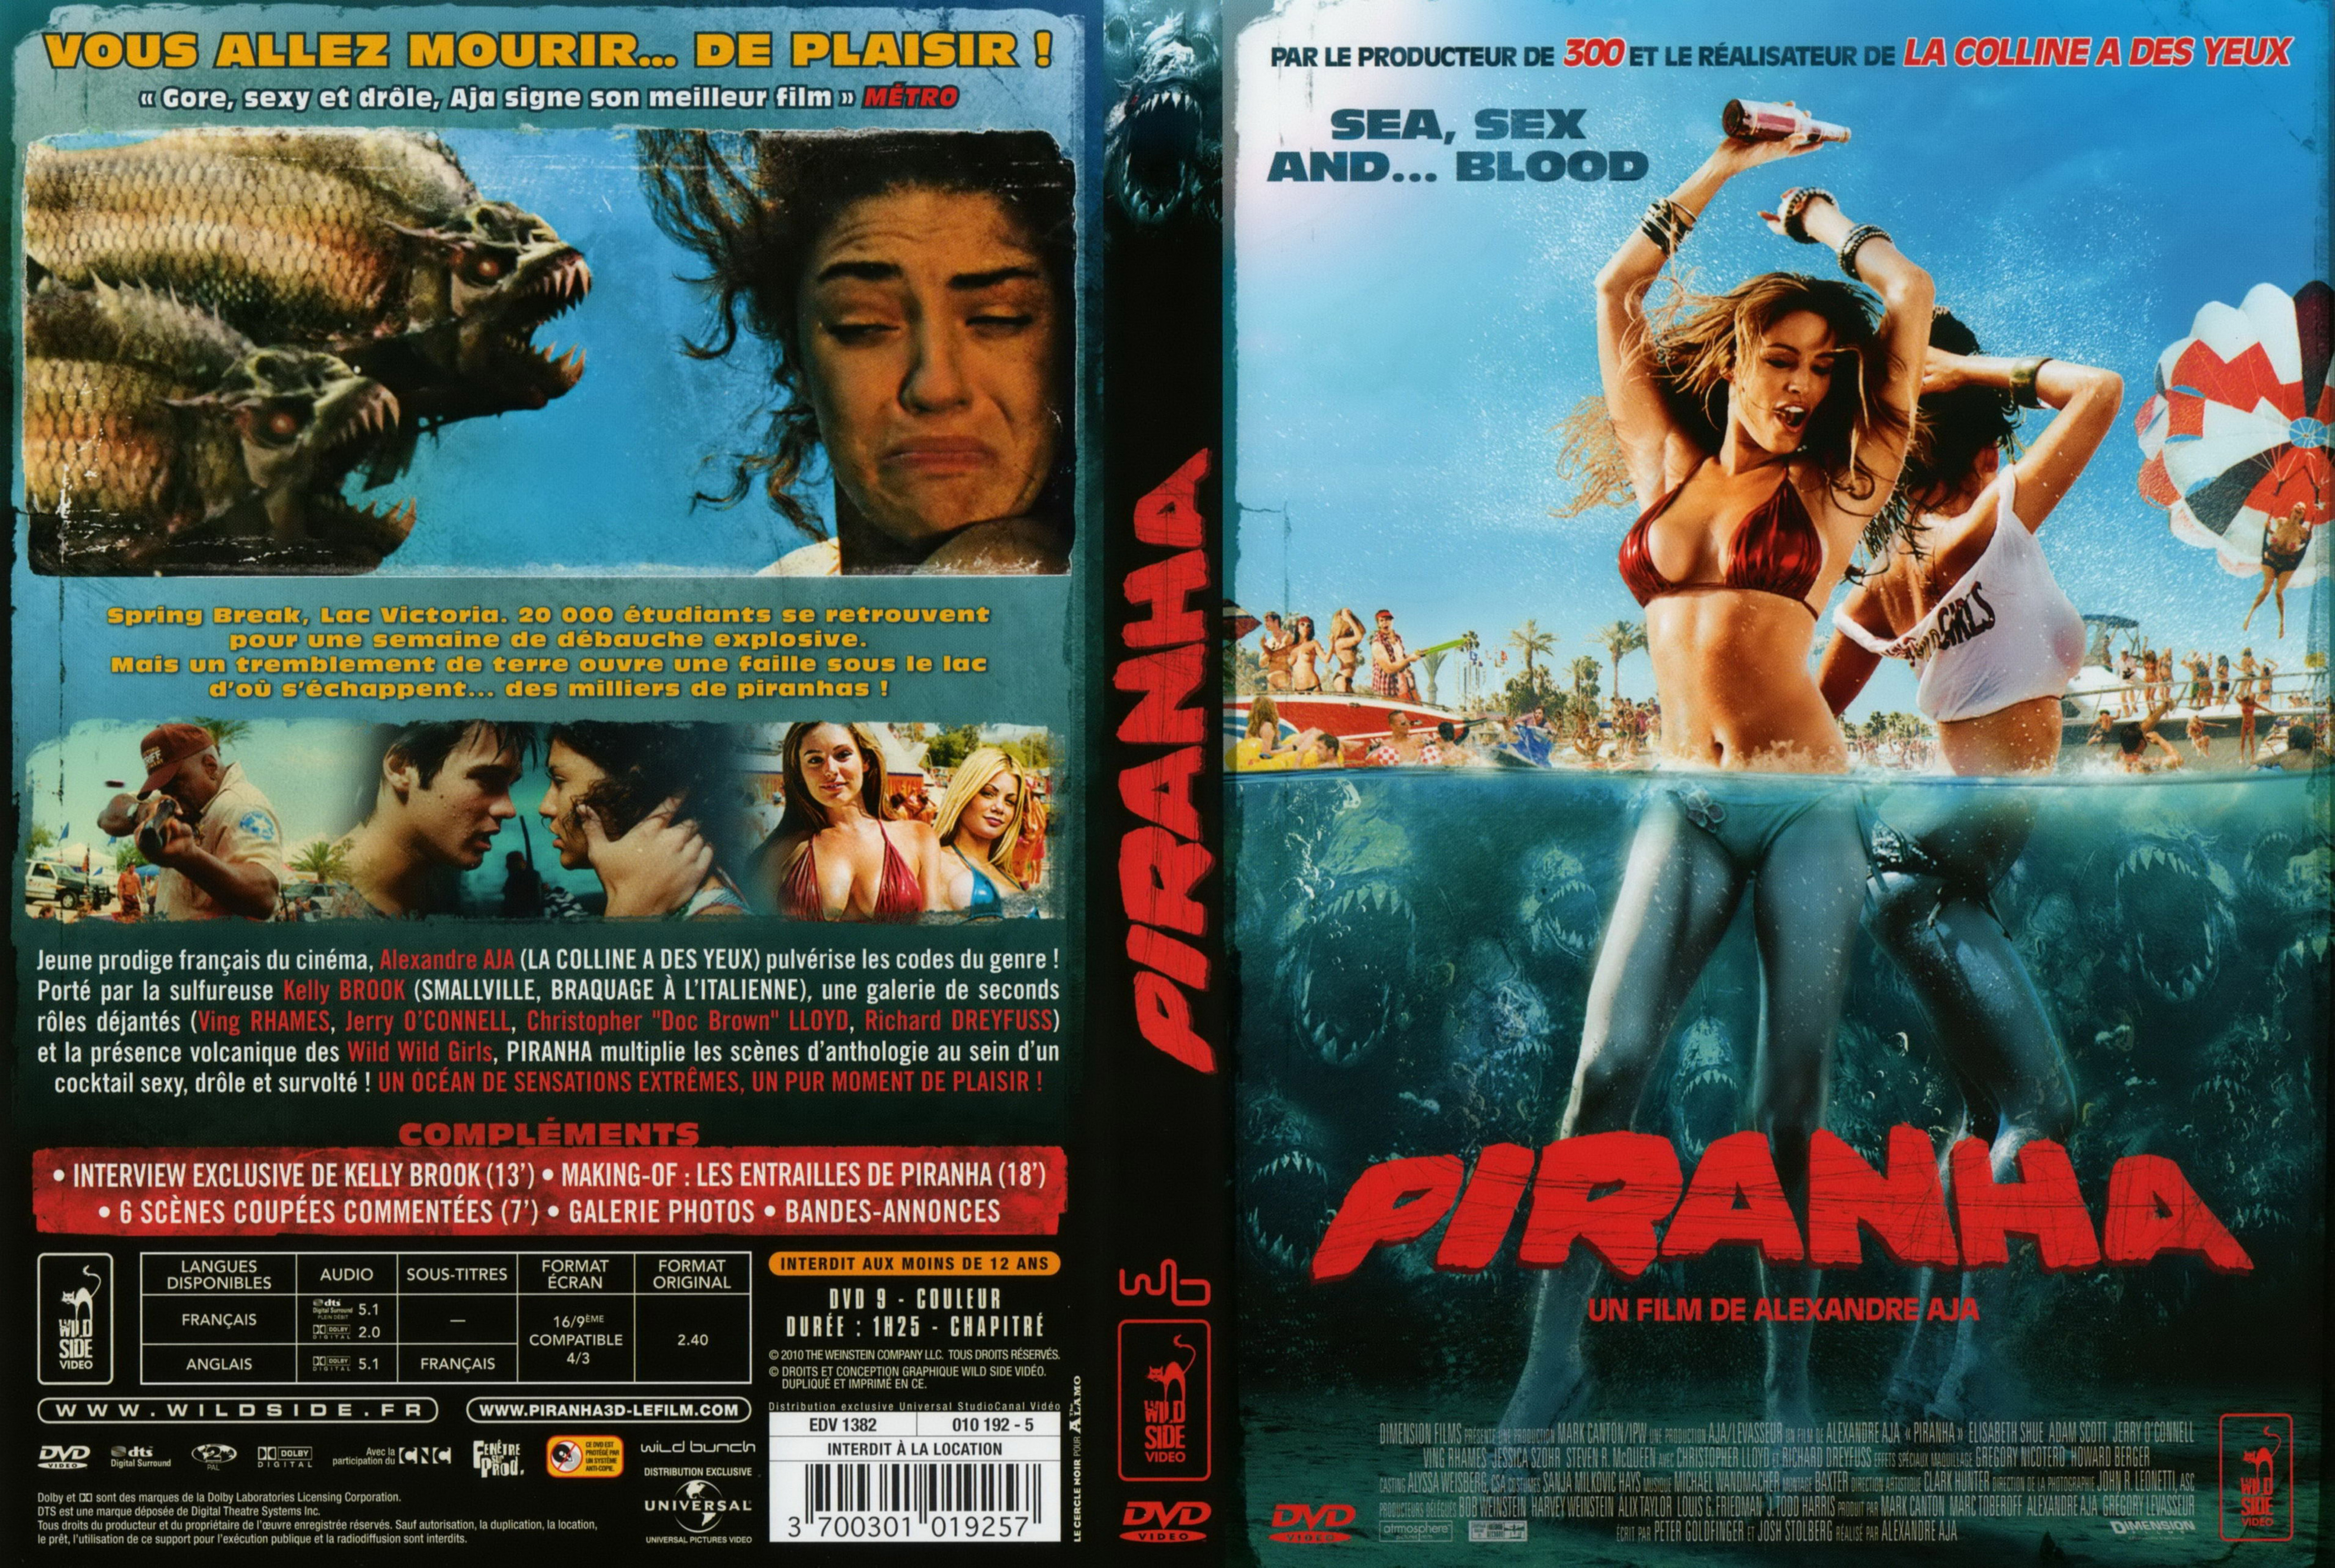 Jaquette DVD Piranha (2010)